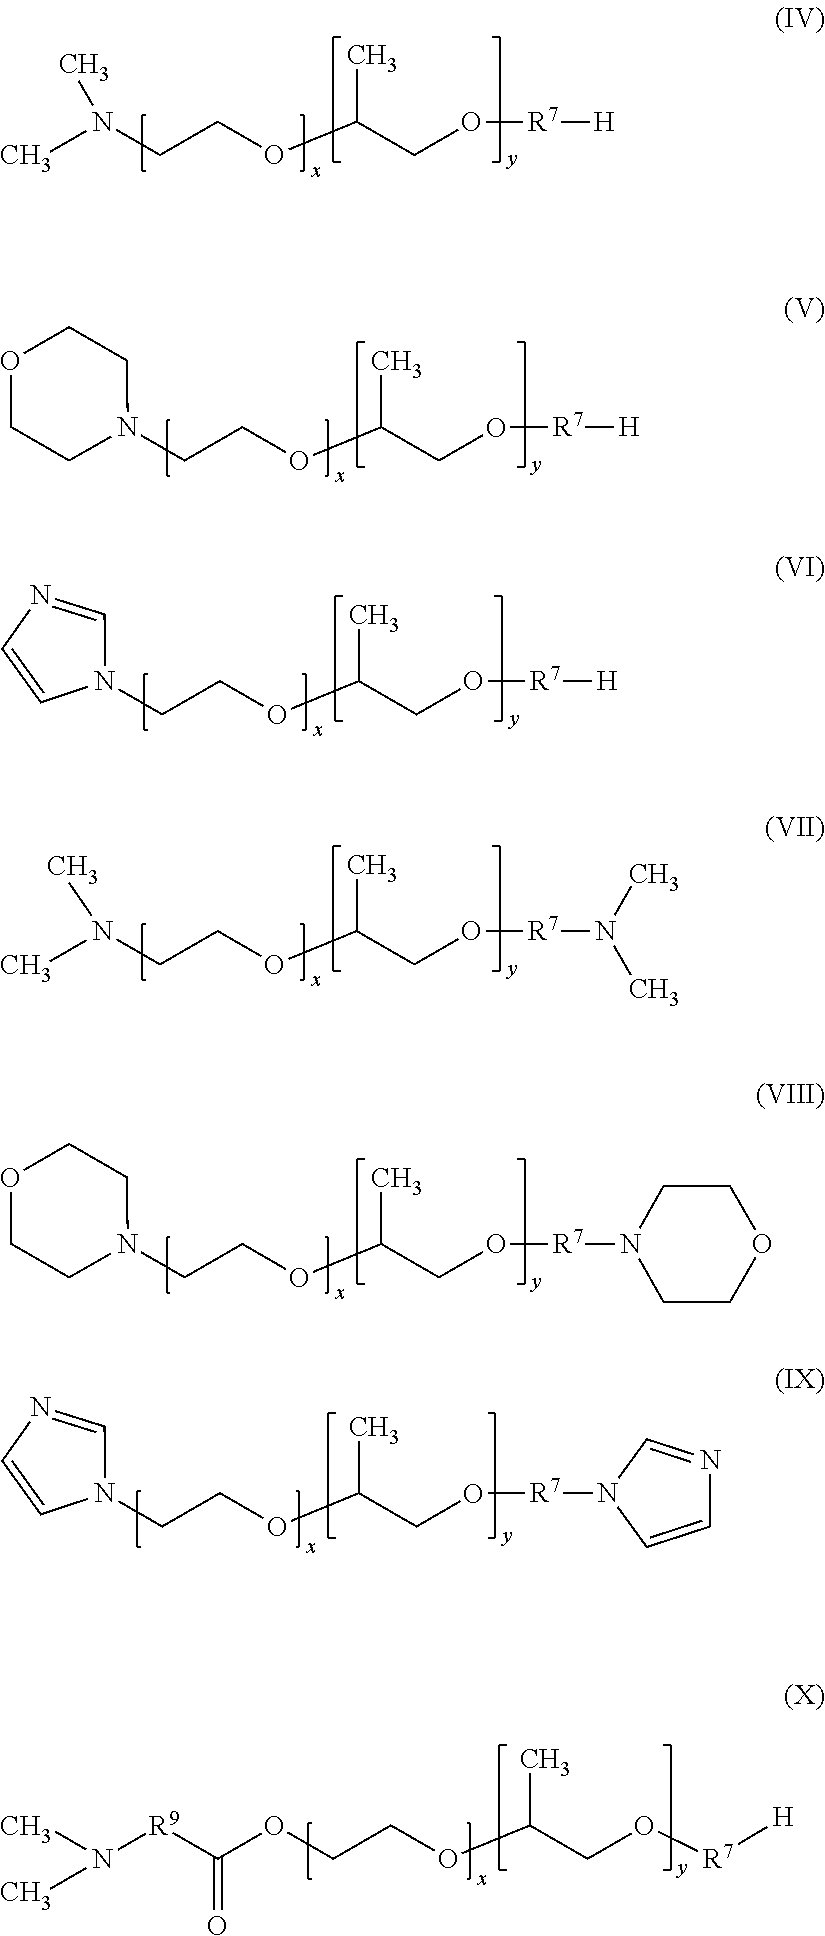 Preparation of isocyanato silanes